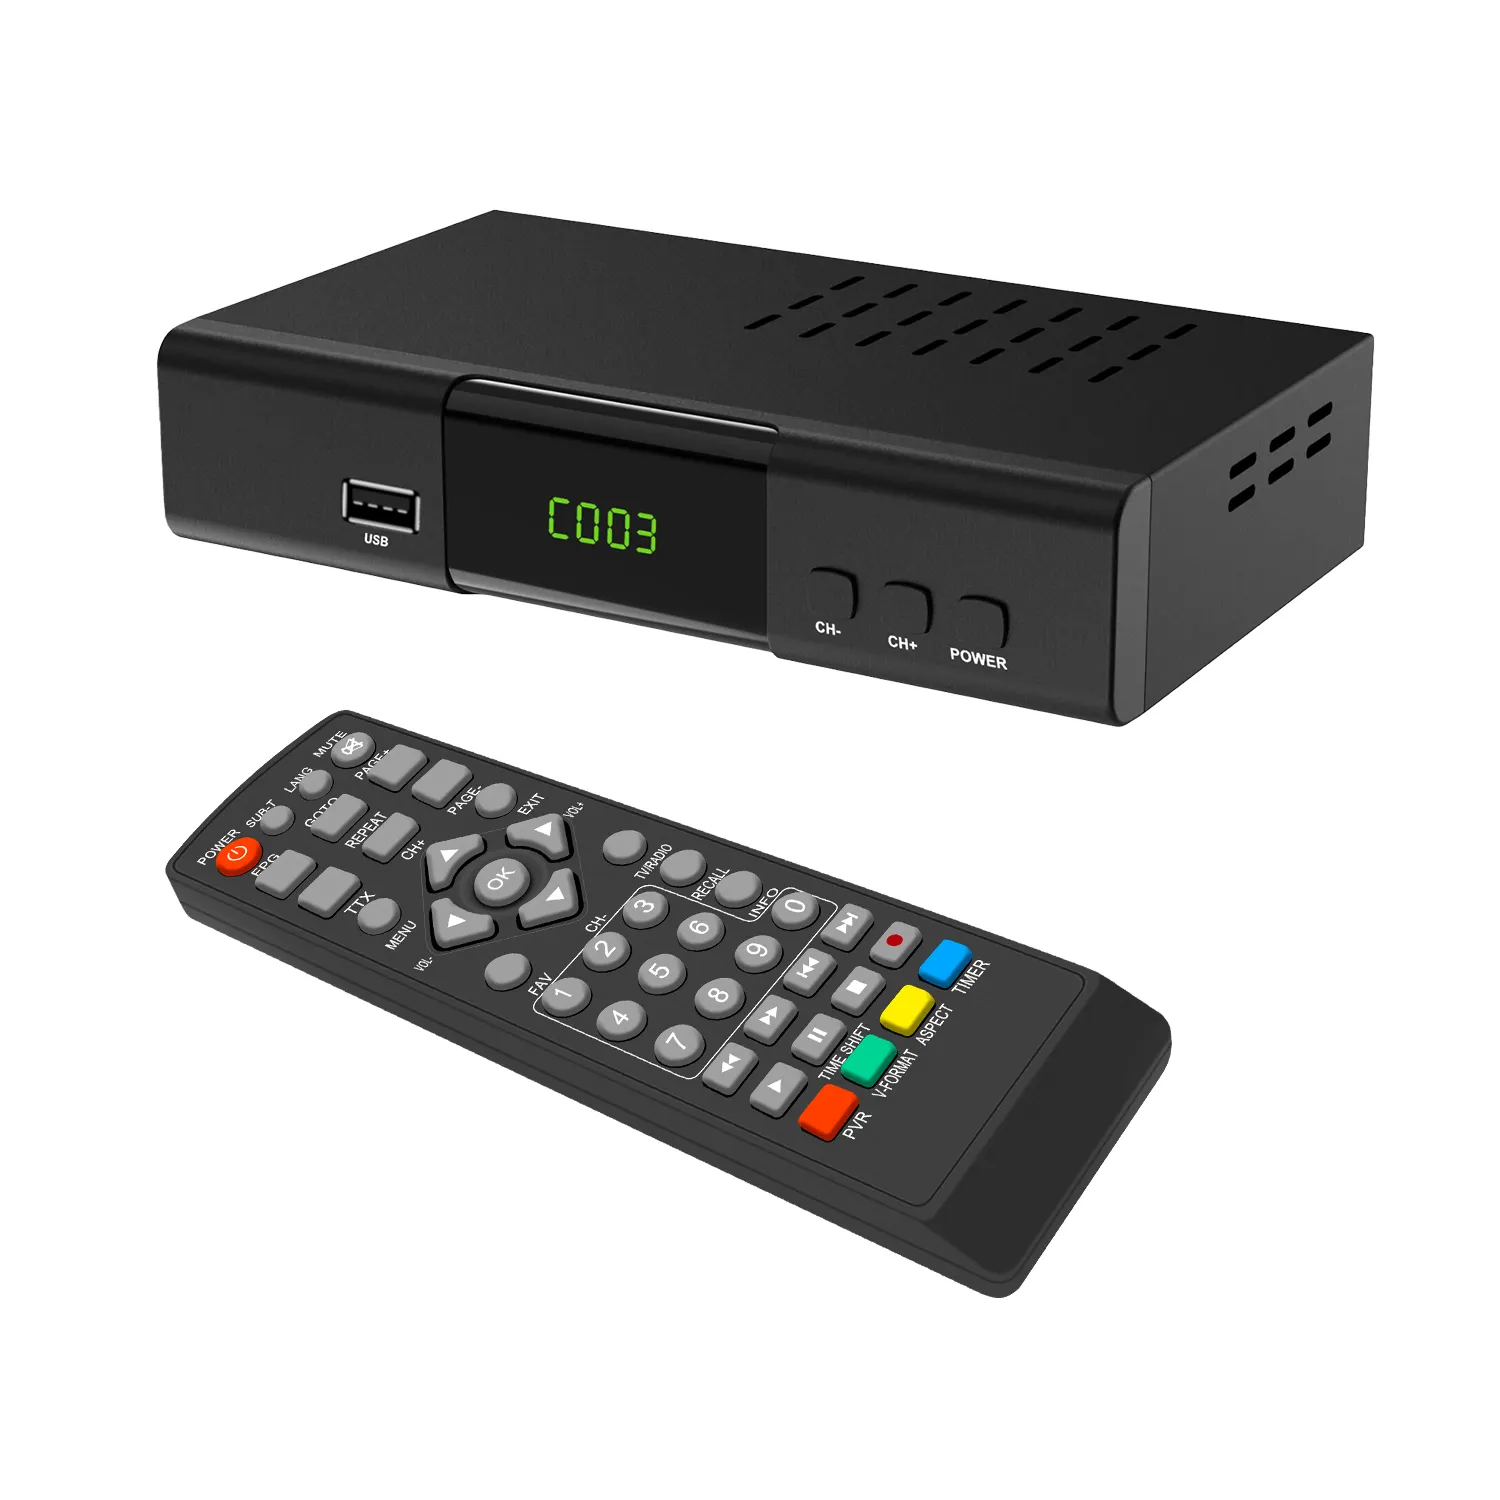 New Arrival TV Box High Definition Digital DVB T2 Free To Air EWS TV Receiver STB DVB-T2 Settop Box Stand DVBT2 Decoder